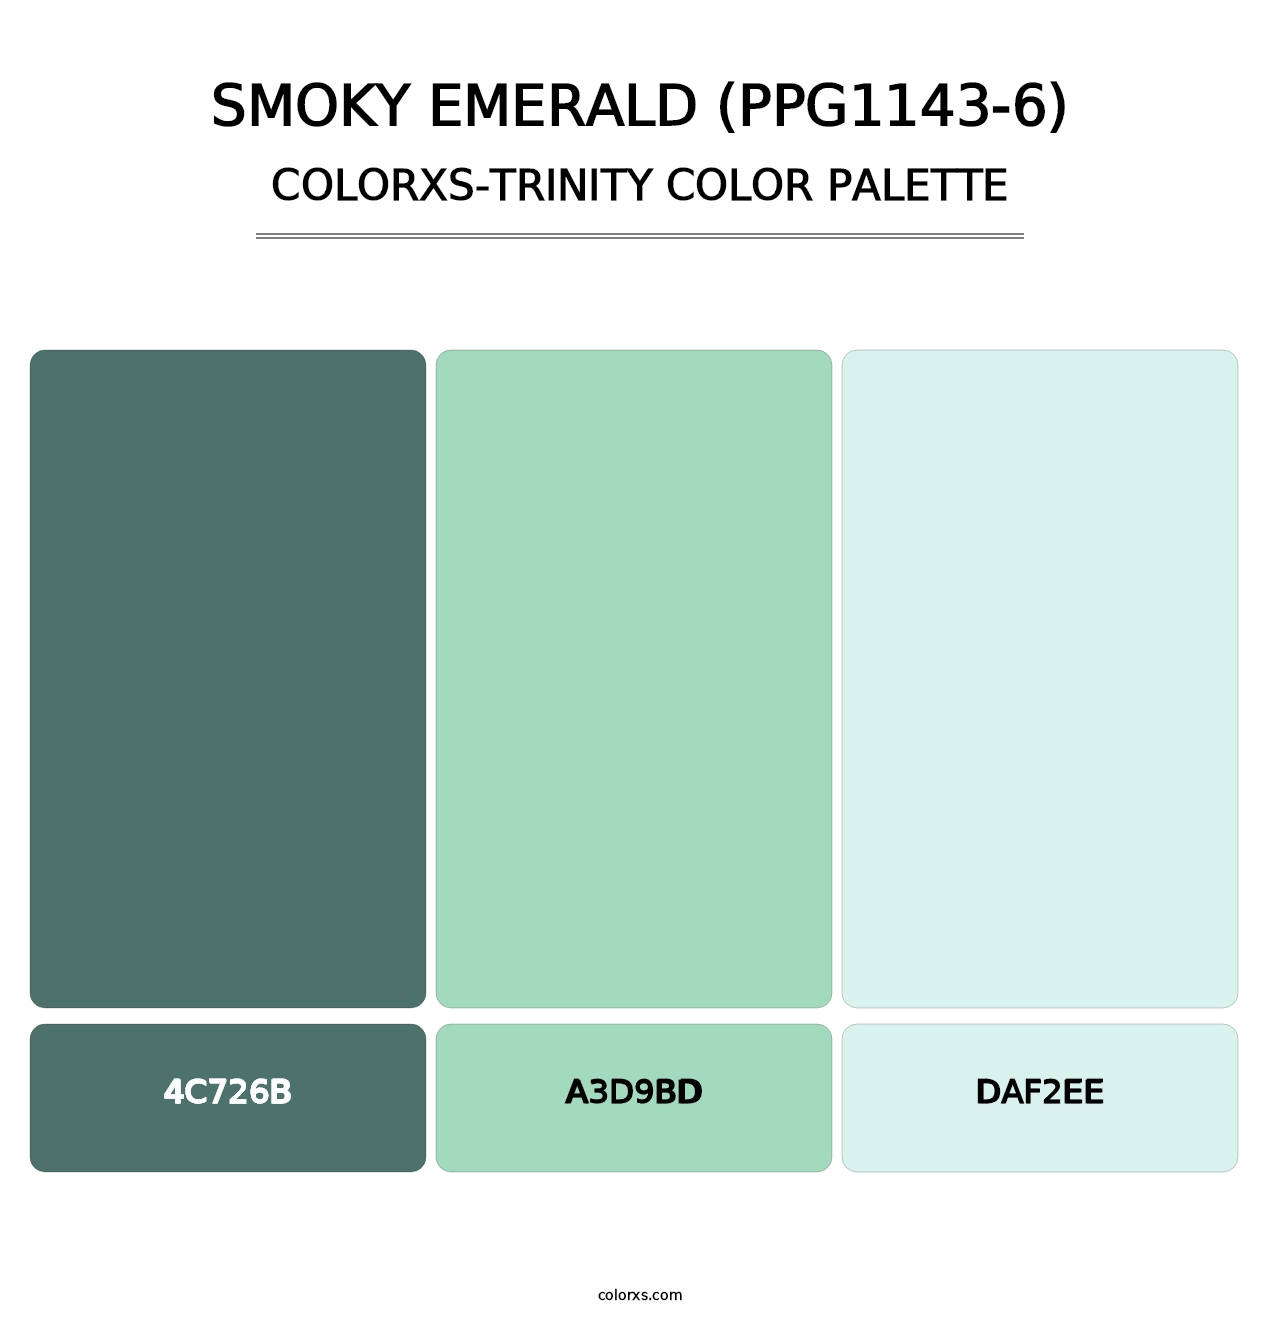 Smoky Emerald (PPG1143-6) - Colorxs Trinity Palette